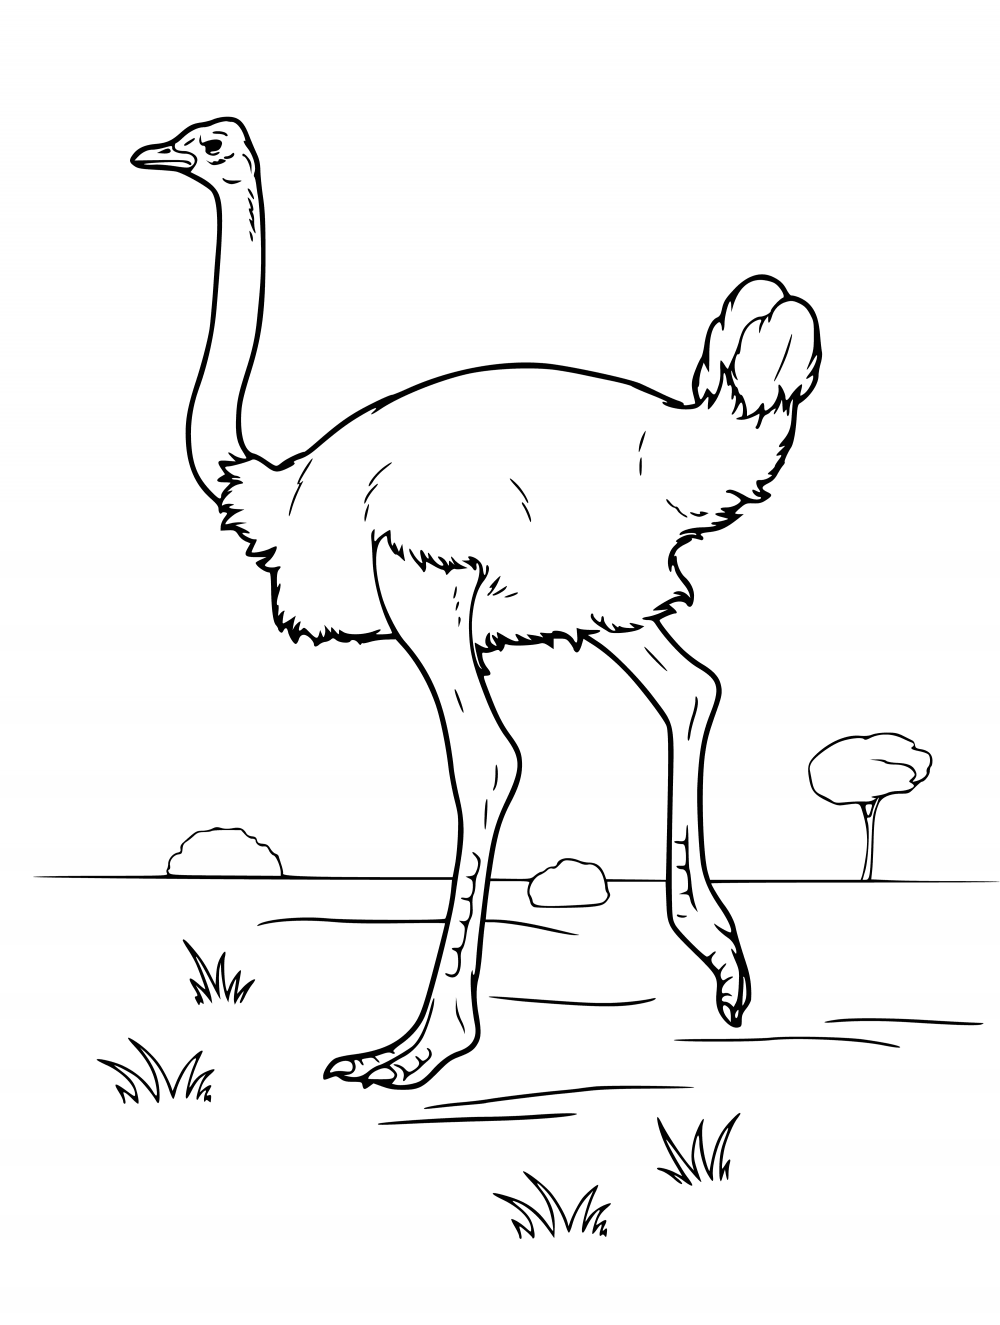 Рисование страуса фломастерами